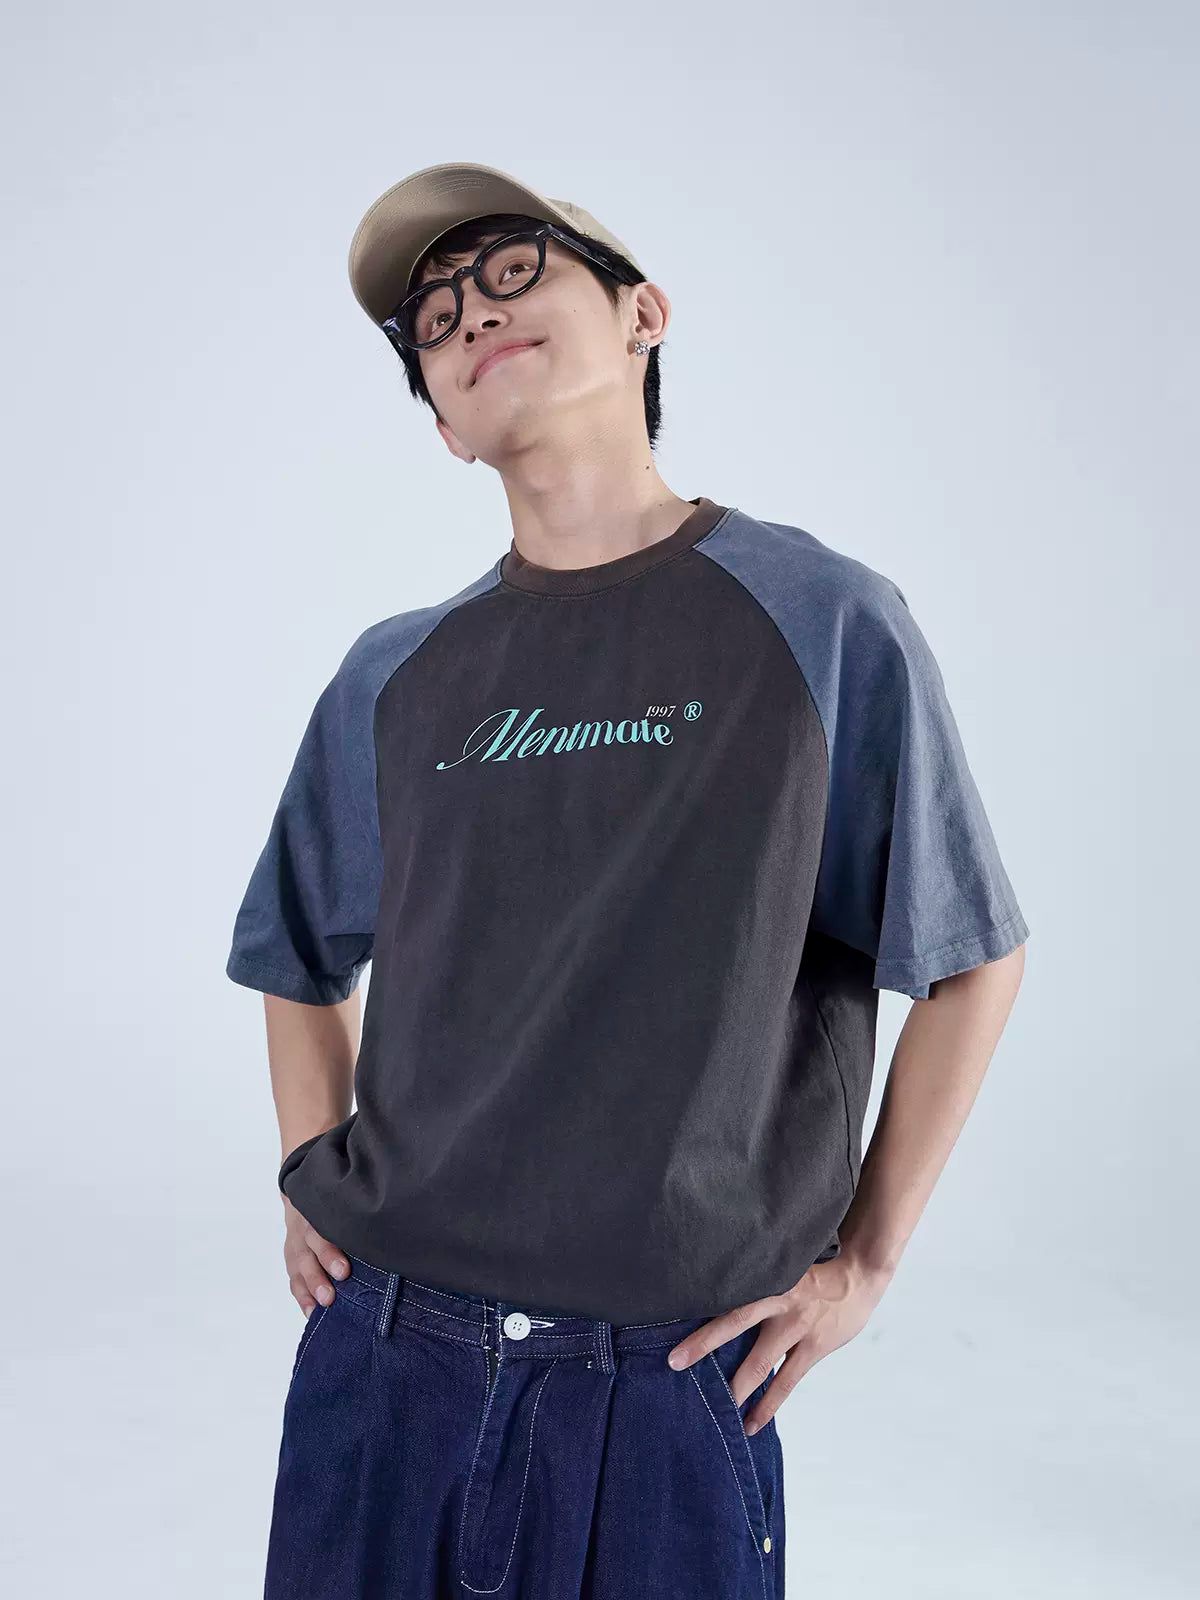 Basic Fit Raglan T-Shirt Korean Street Fashion T-Shirt By Mentmate Shop Online at OH Vault